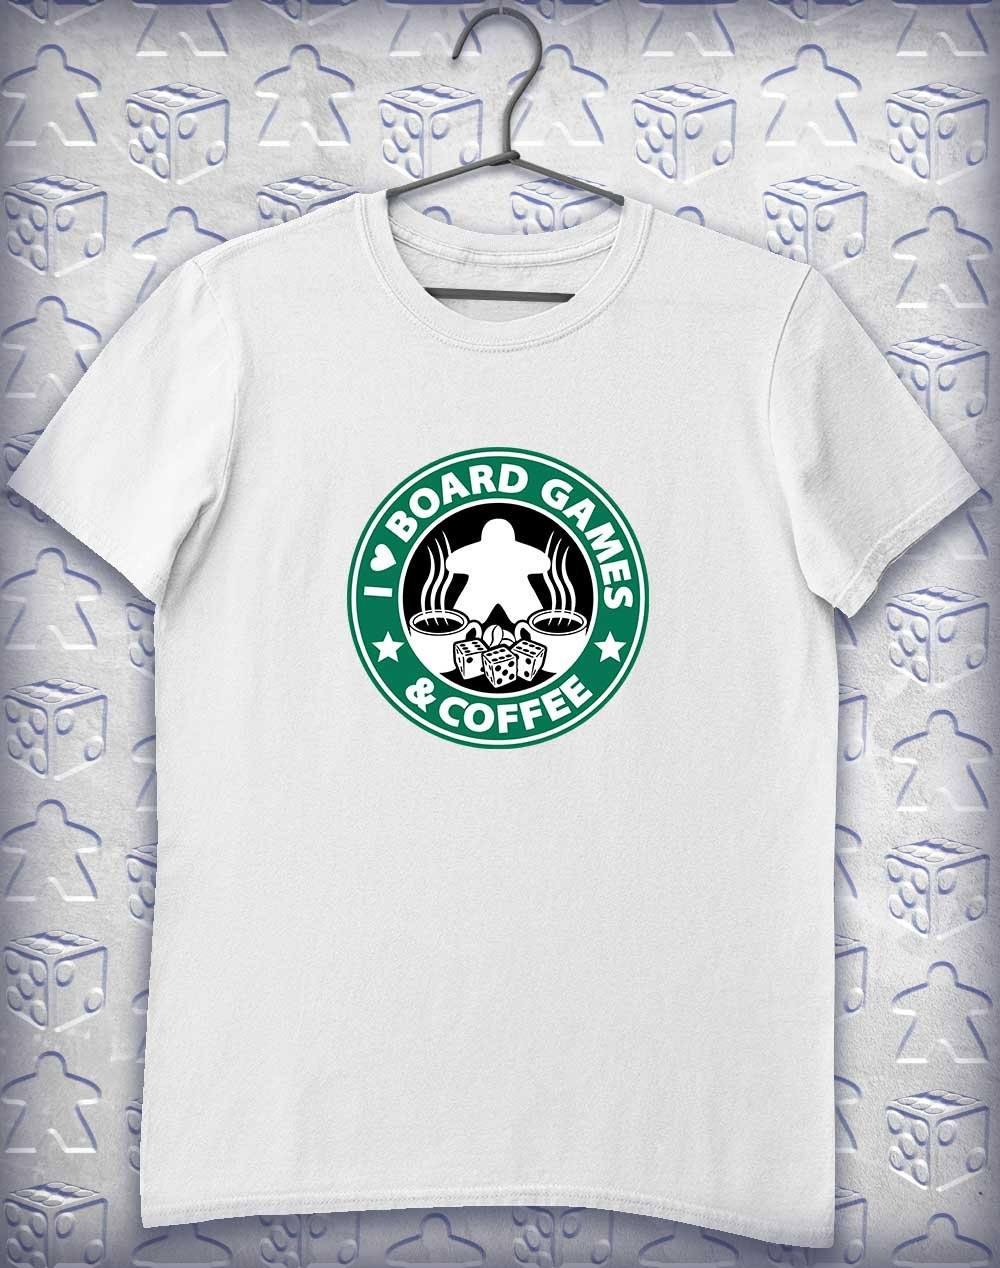 Board Games & Coffee Alphagamer T Shirt L / White  - Off World Tees